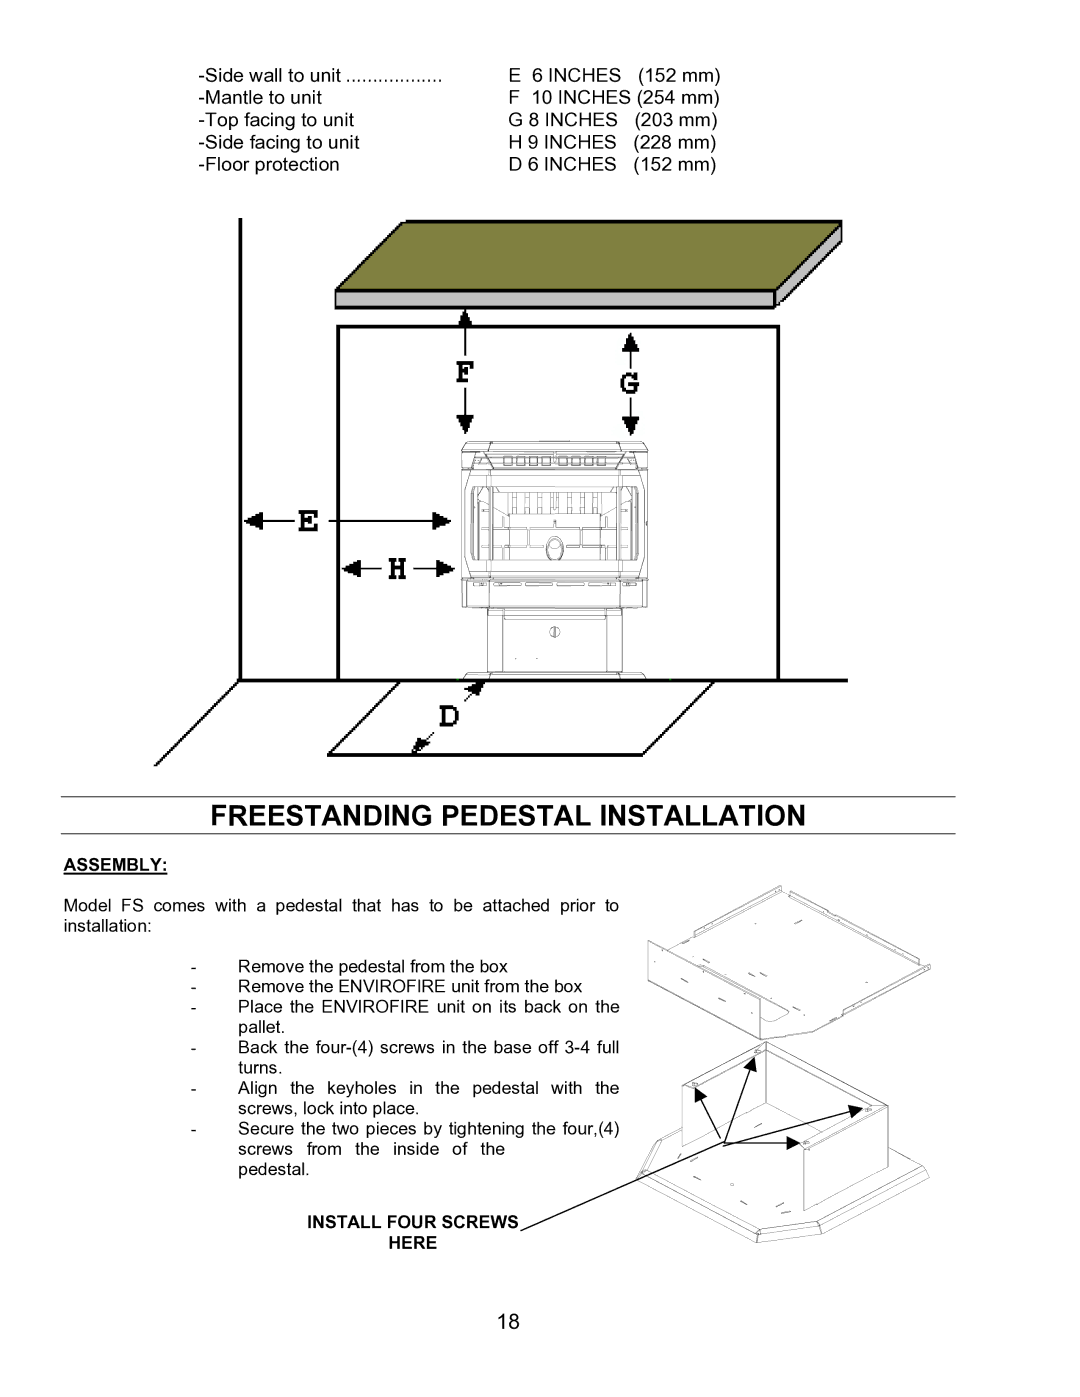 Enviro EF-IV I technical manual Freestanding Pedestal Installation, Assembly, Install Four Screws Here 